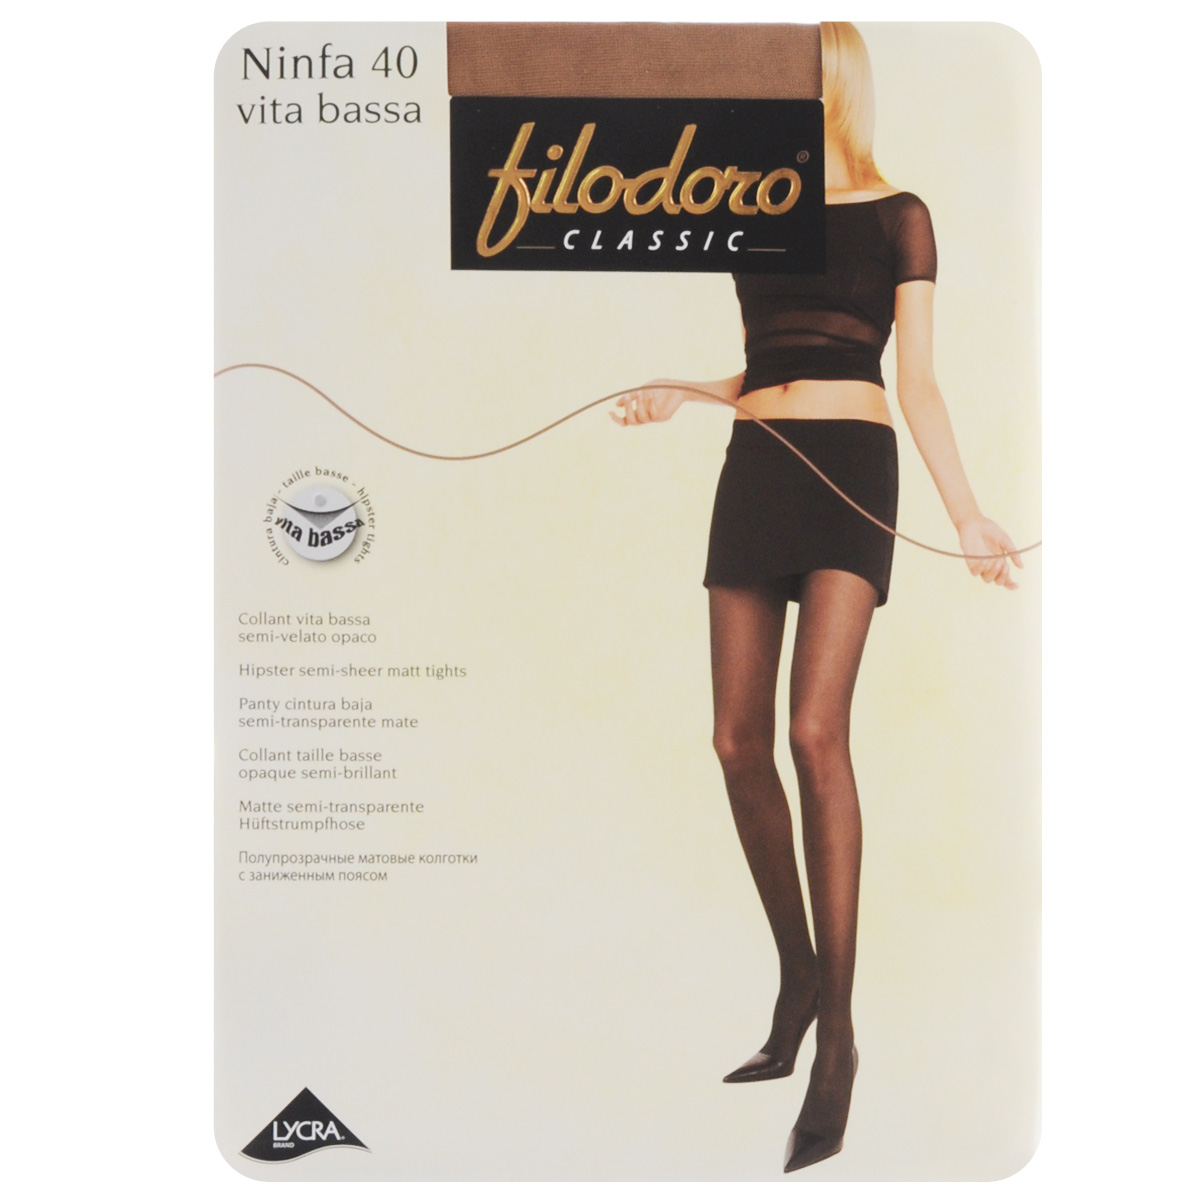 Колготки женские Filodoro Classic Ninfa 40 Vita Bassa, цвет: Cognac (загар). C115060FC. Размер 4 (L)